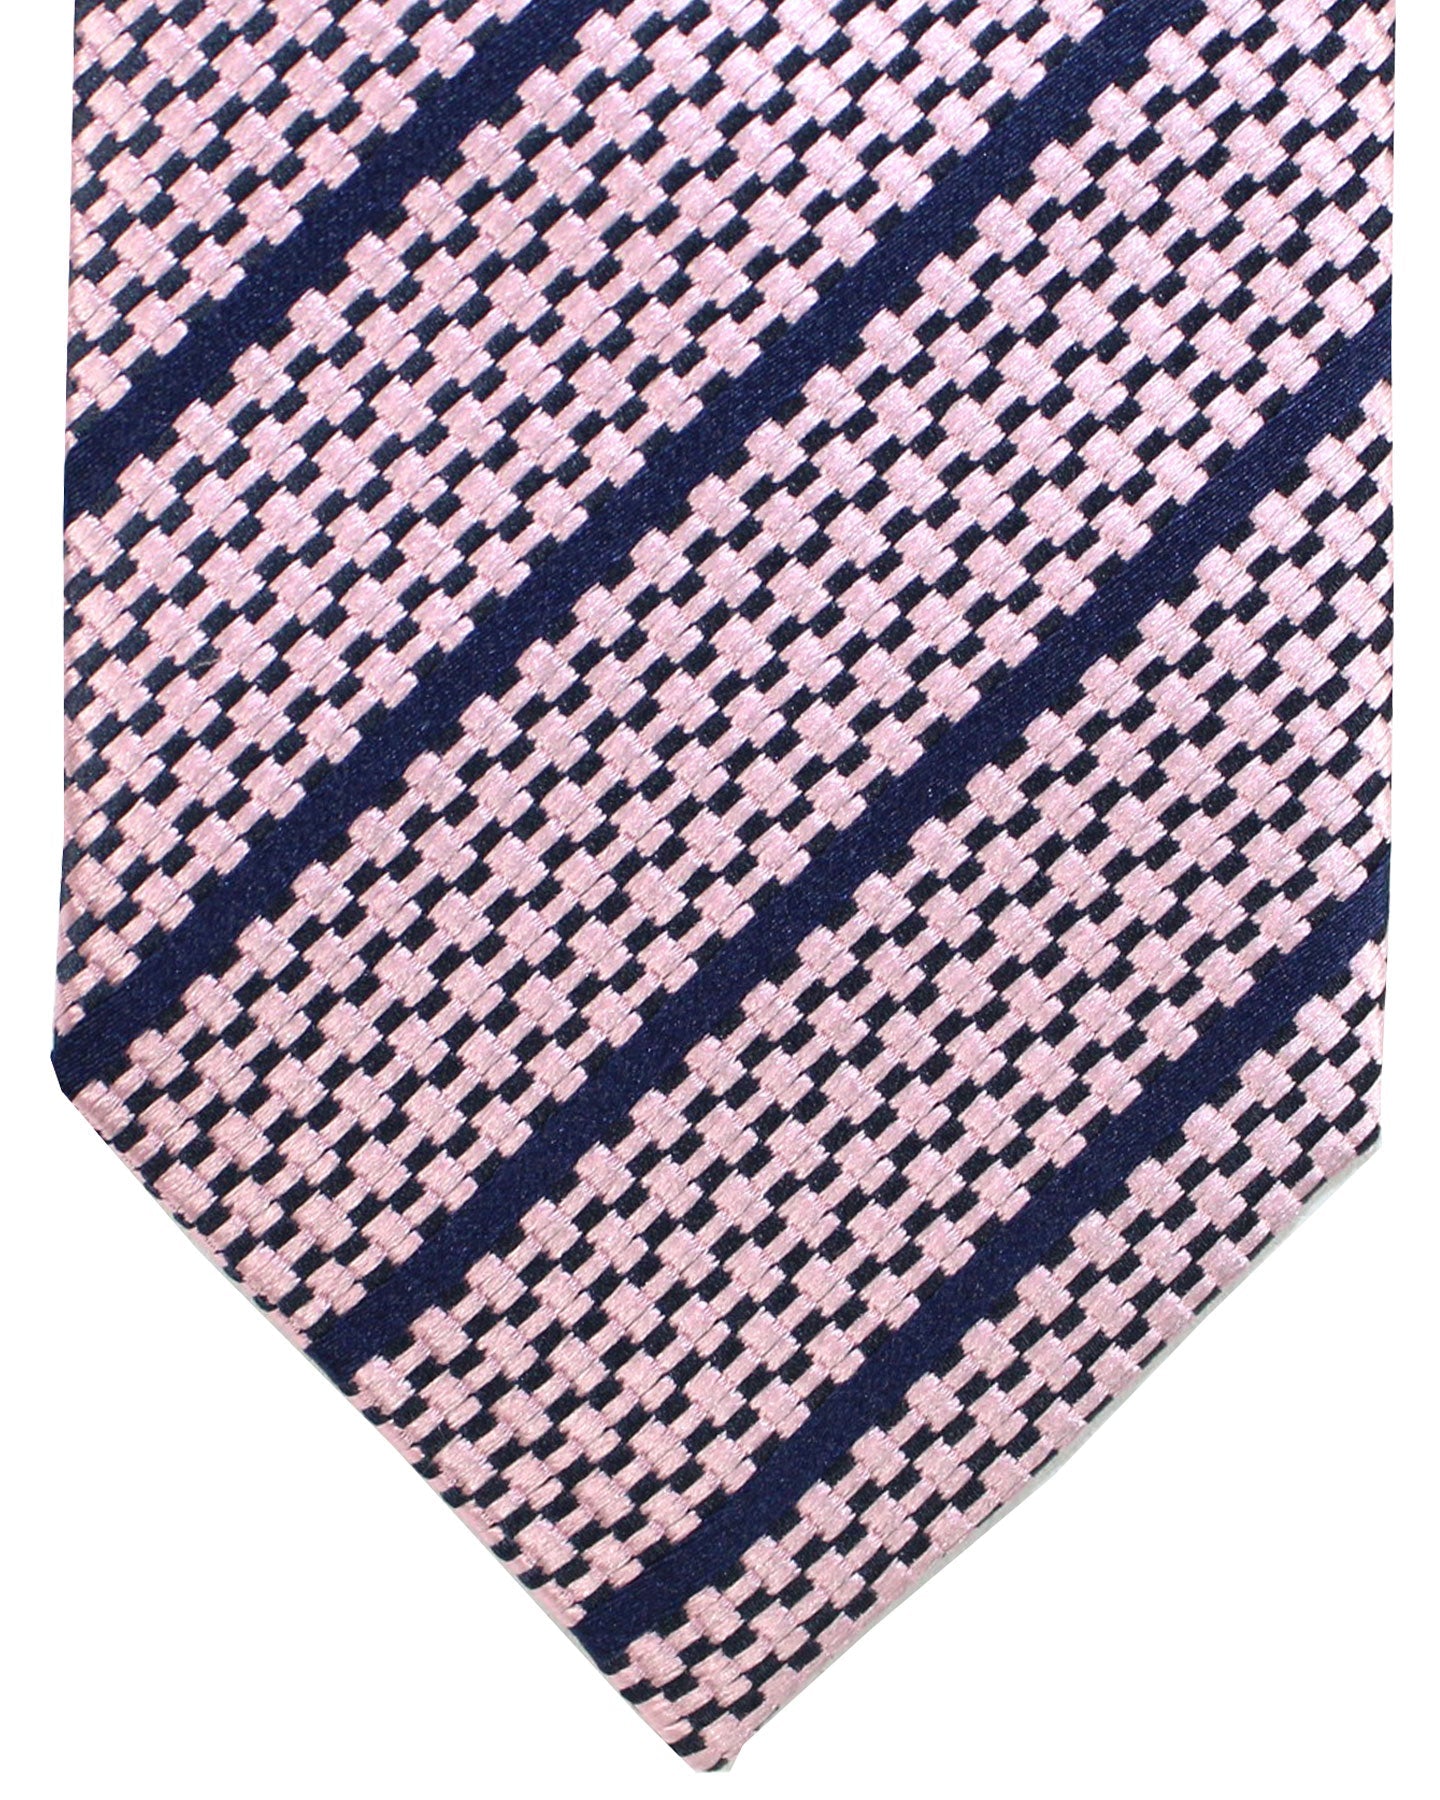 Ermenegildo Zegna Tie Pink Navy Geometric Stripes - Zegna 5 Pieghe Collection